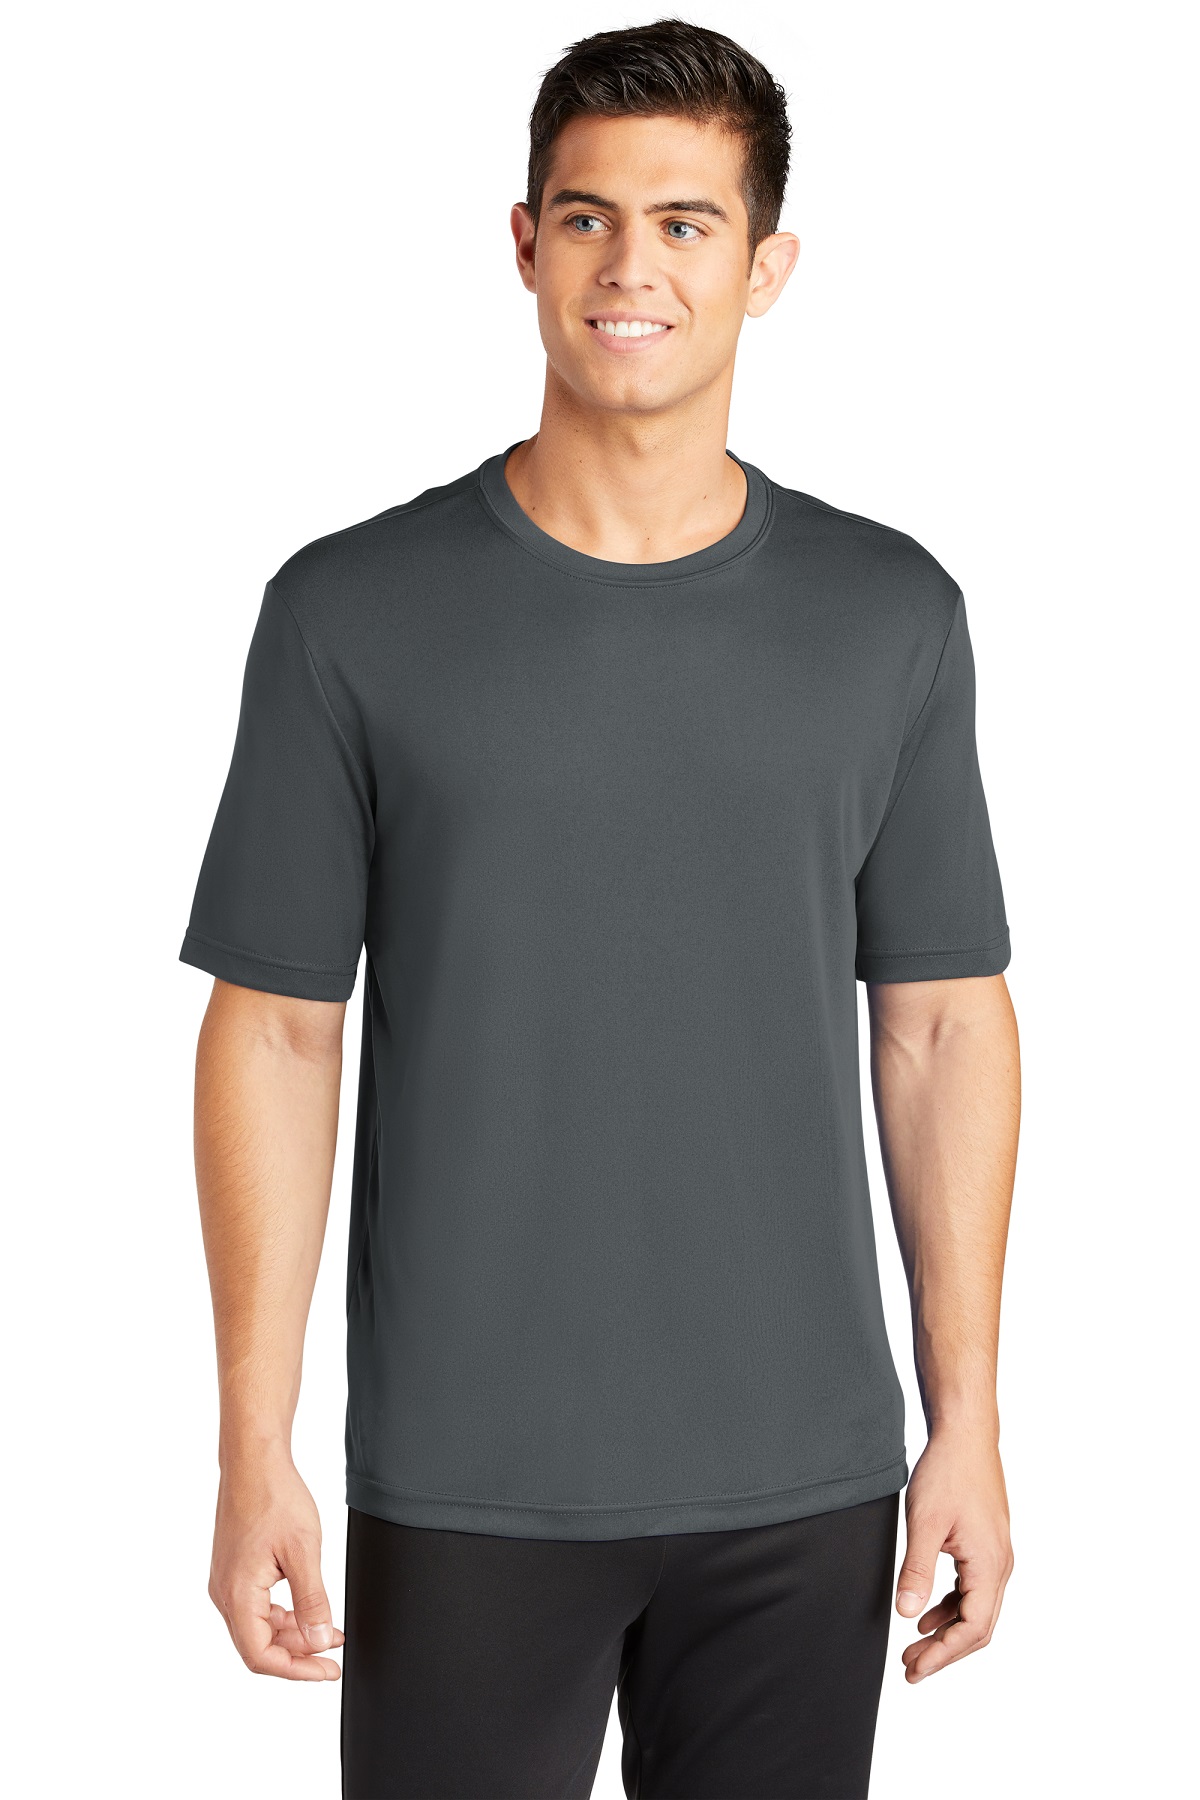 Sport-Tek Printed Men's Competitor Tee | T-Shirts - Queensboro